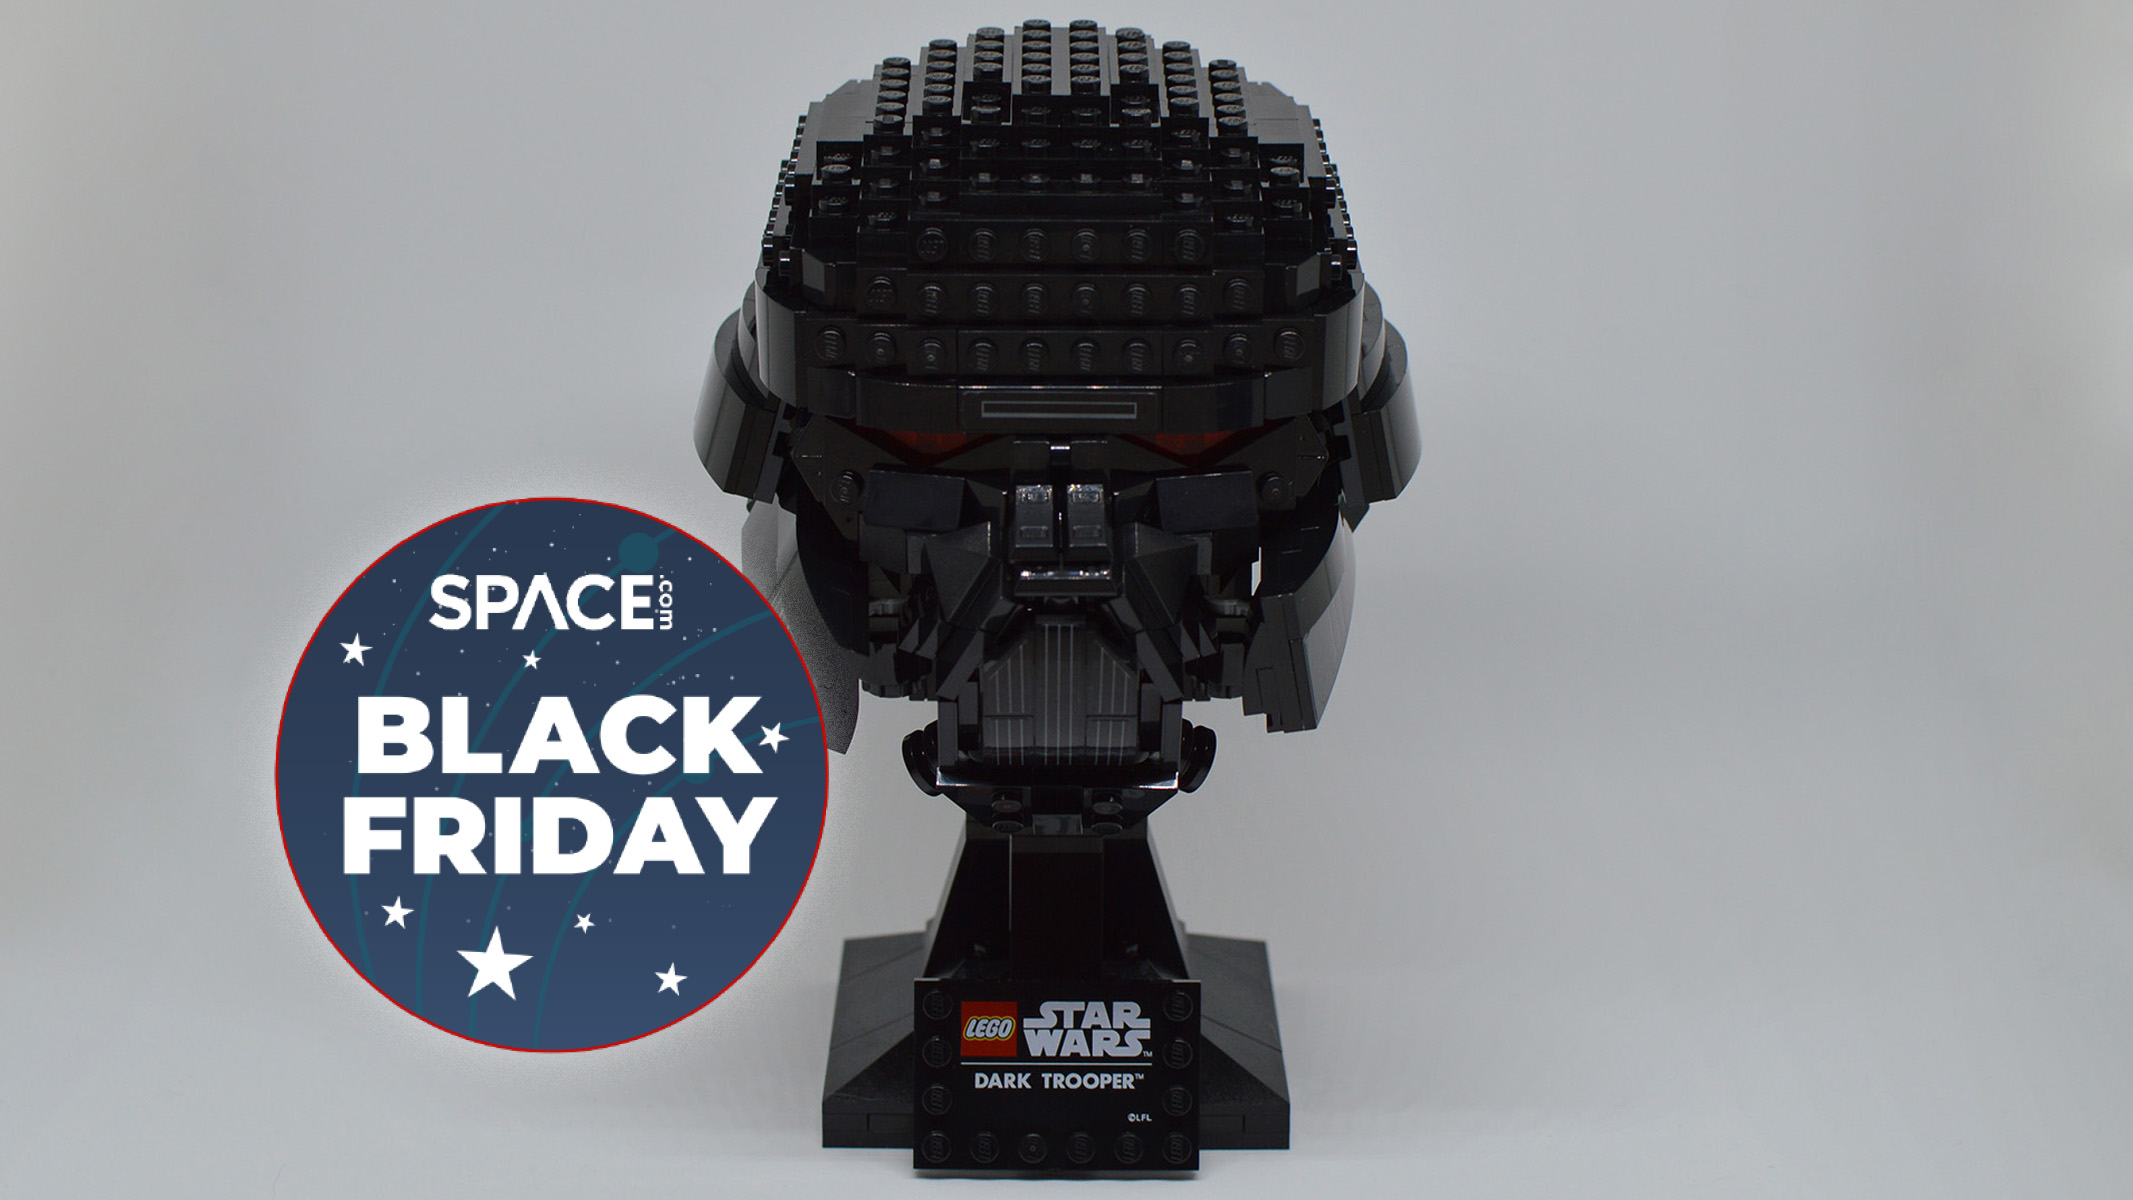 Save 20% on Lego Star Wars Dark Trooper Helmet this Black Friday Space